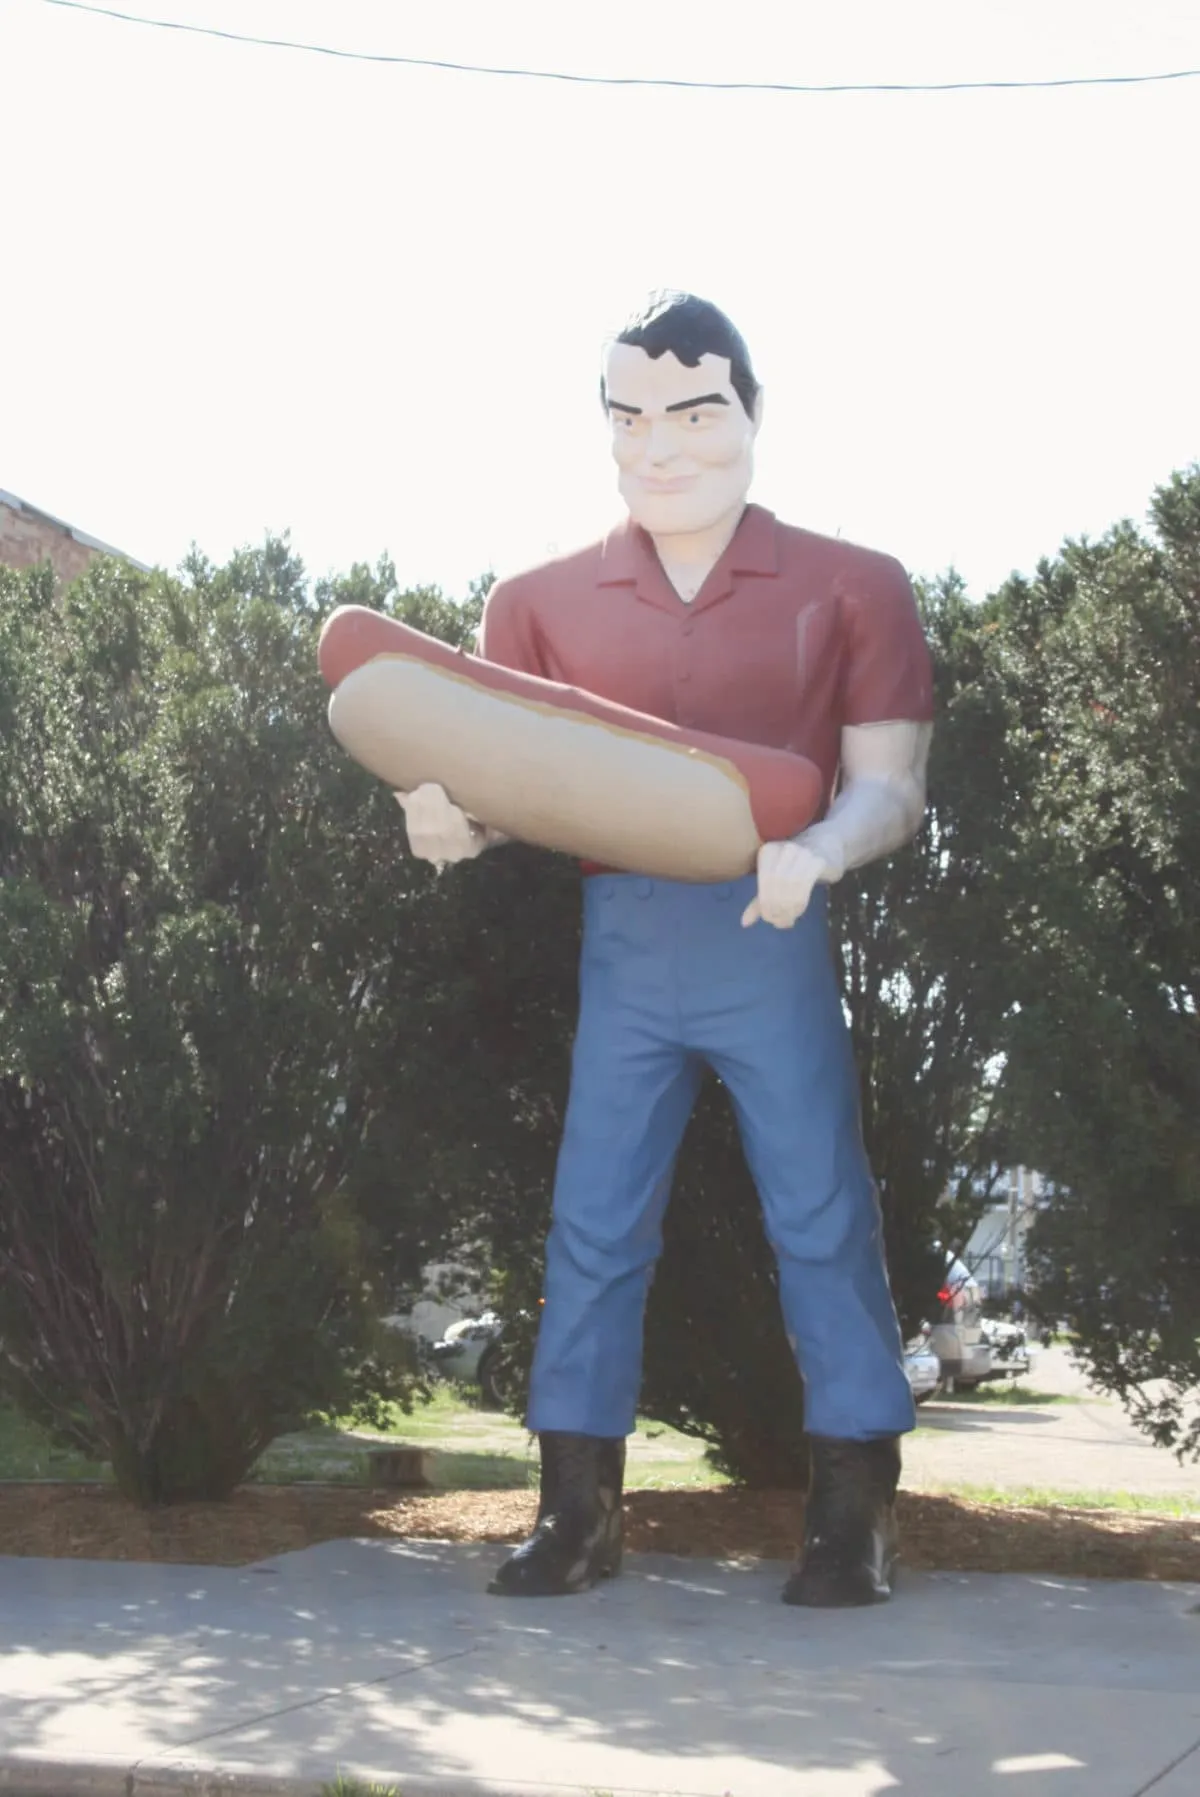 Muffler Man Holding a Hot Dog in Atlanta, Illinois